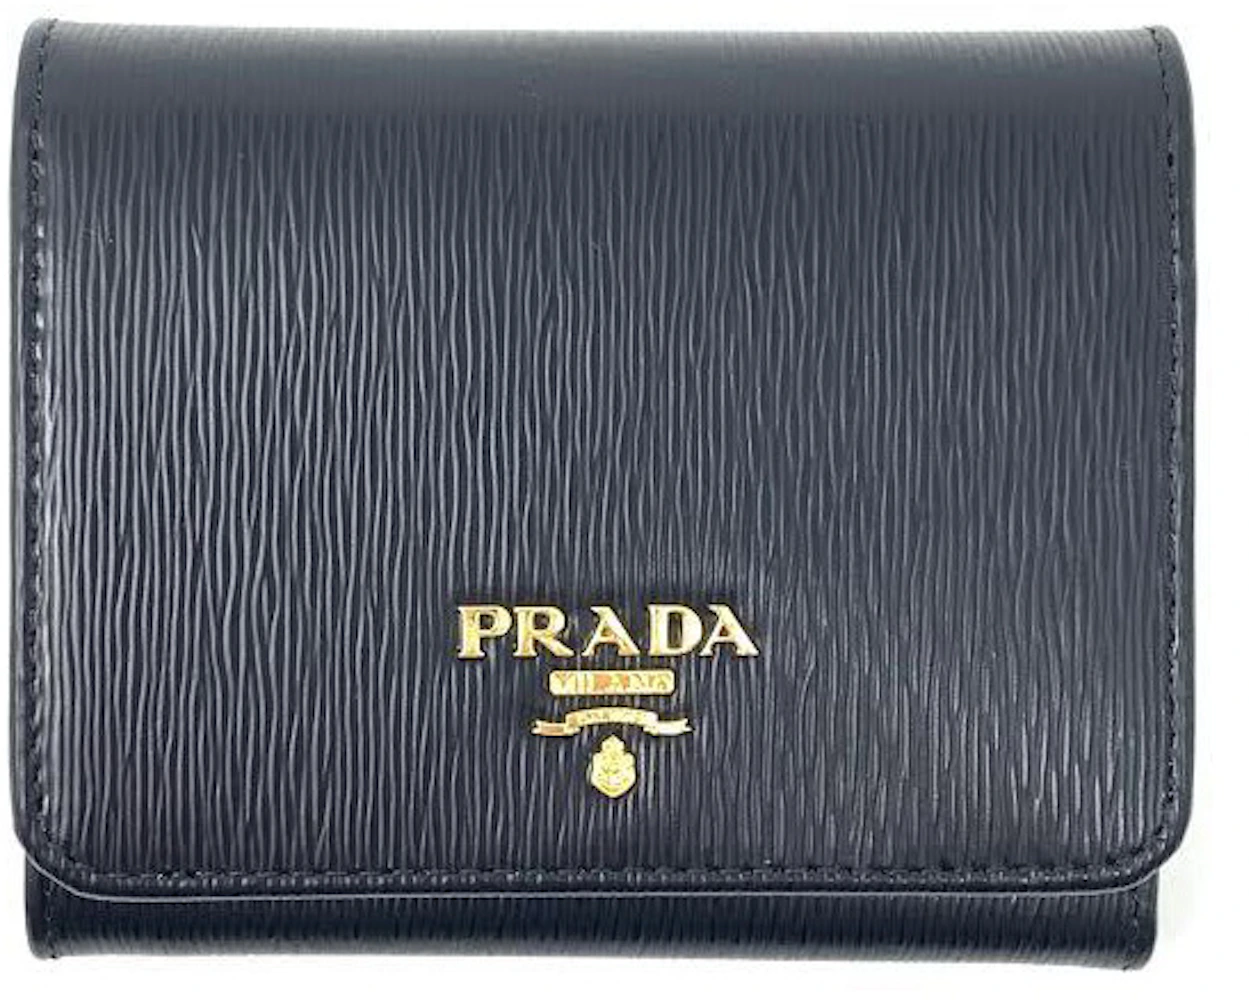 Prada Vitello Move Compact Wallet Black in Vitello Leather with Gold ...